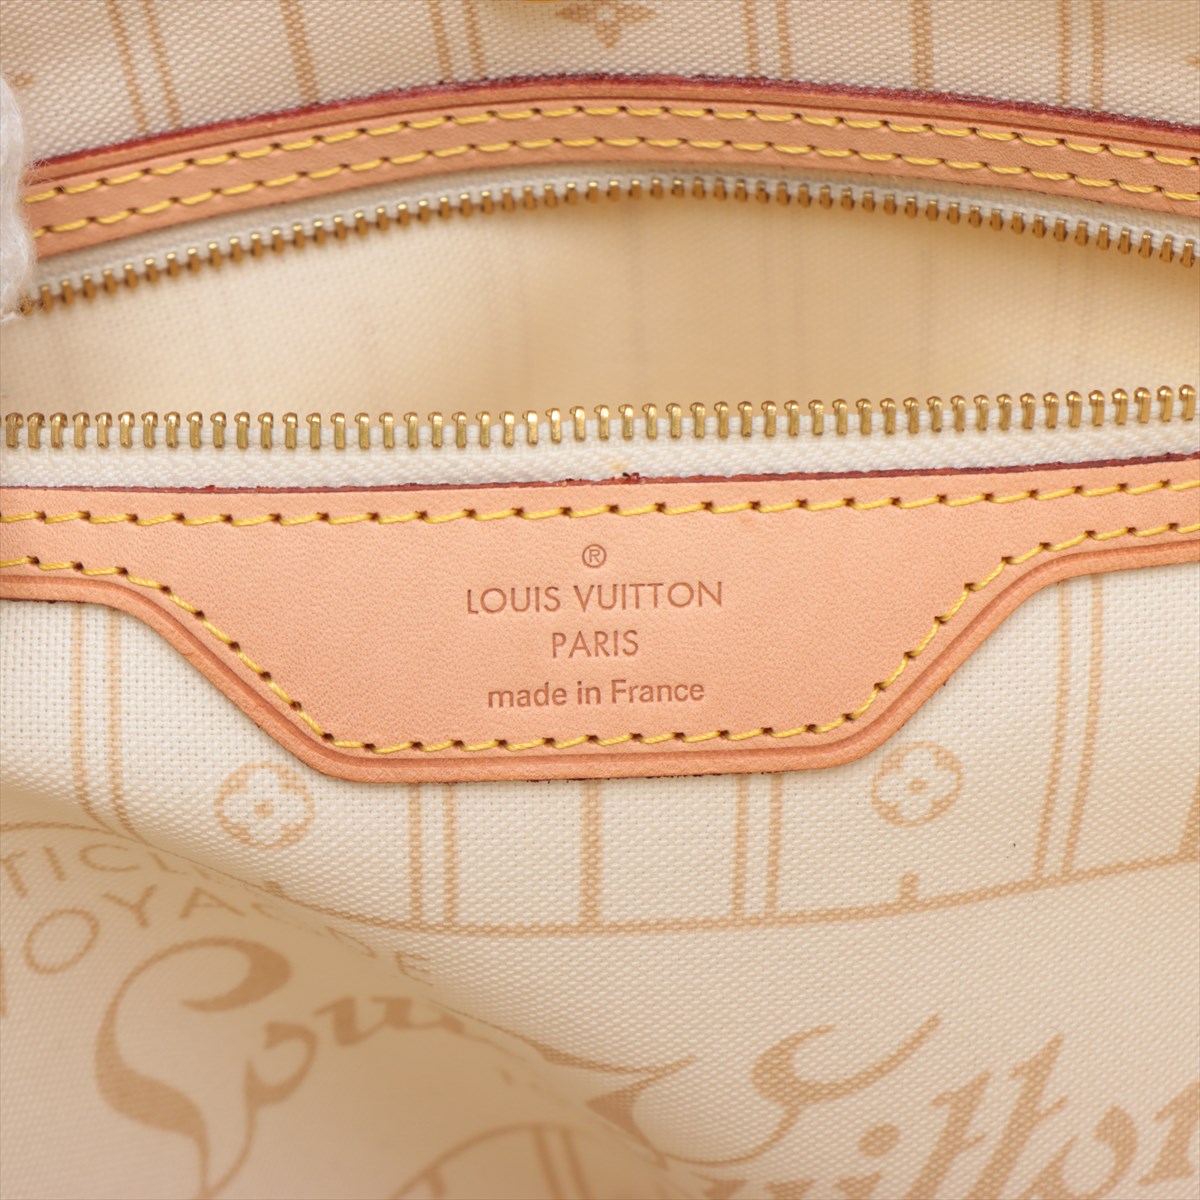 Pre Owned Louis Vuitton Damier Azur MM Canvas Neverfull Handbag